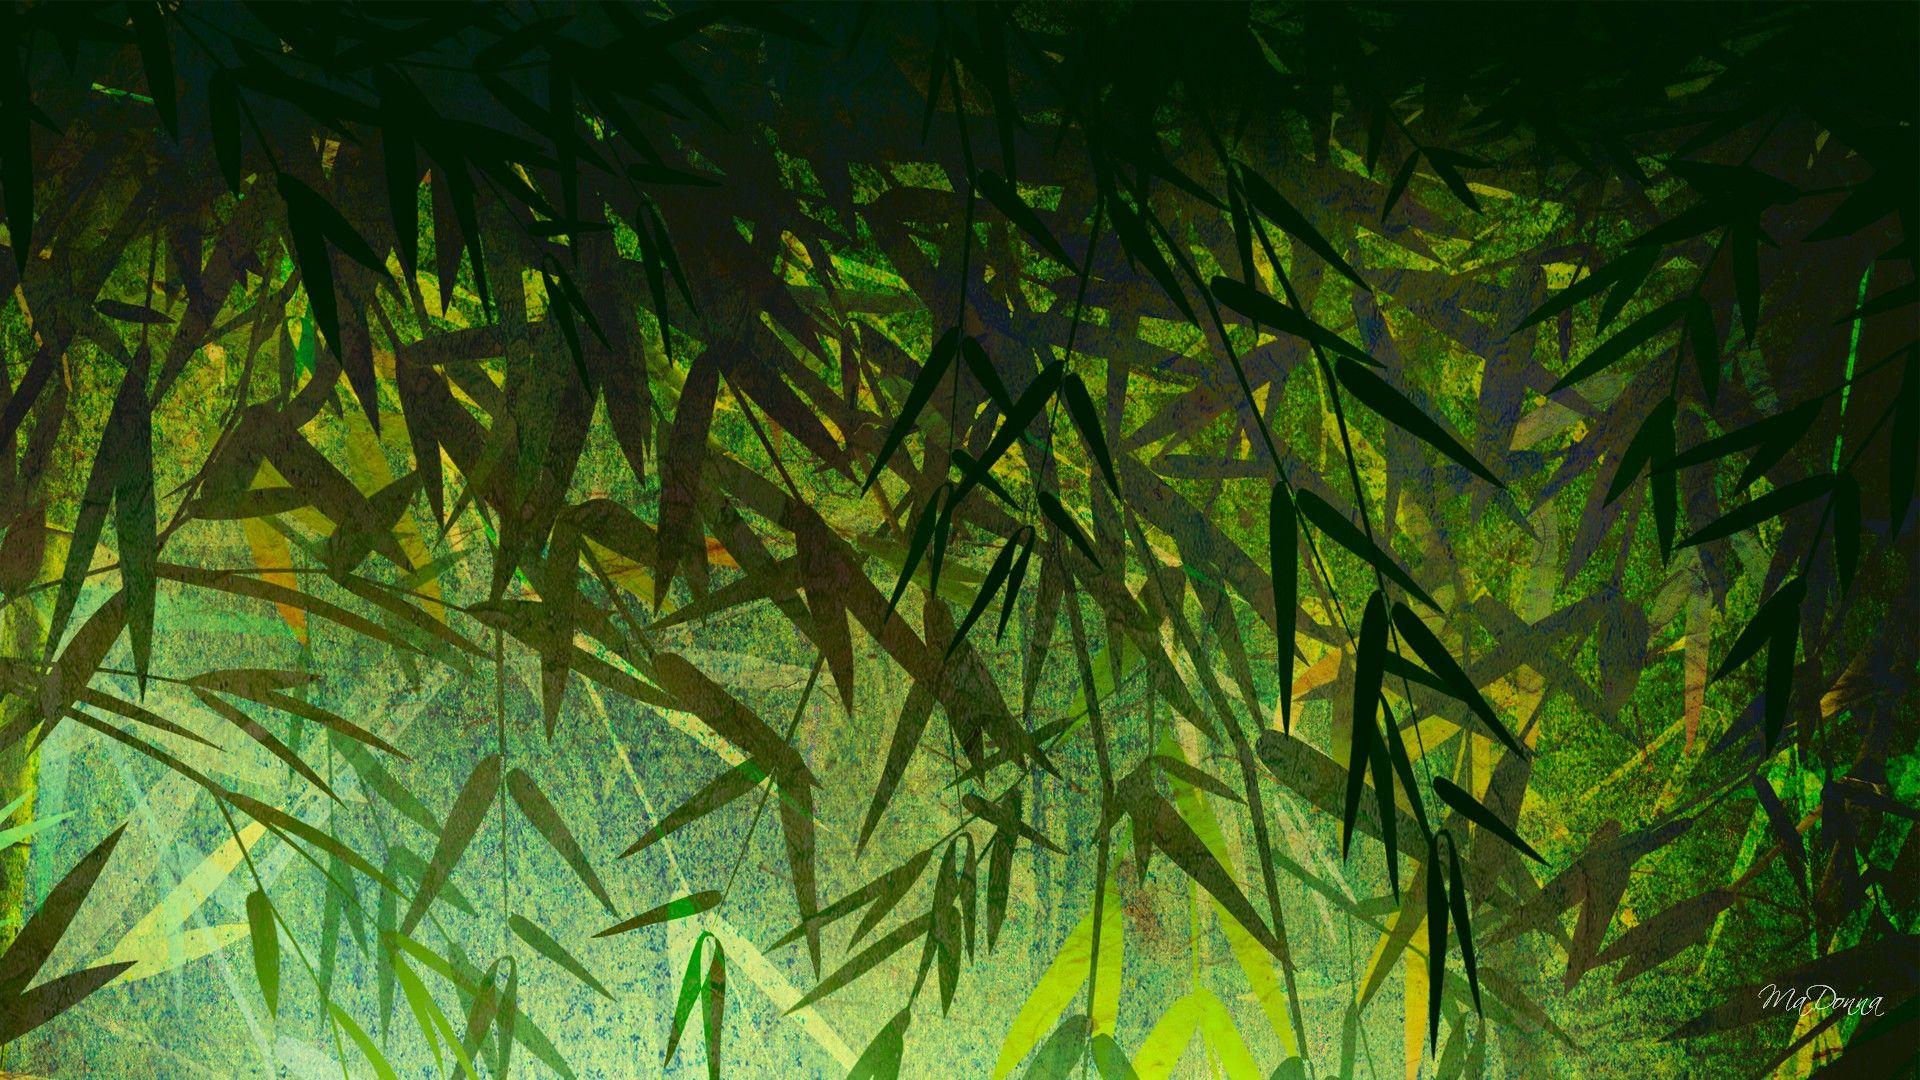 Bamboo 4K Wallpapers Top Free Bamboo 4K Backgrounds WallpaperAccess